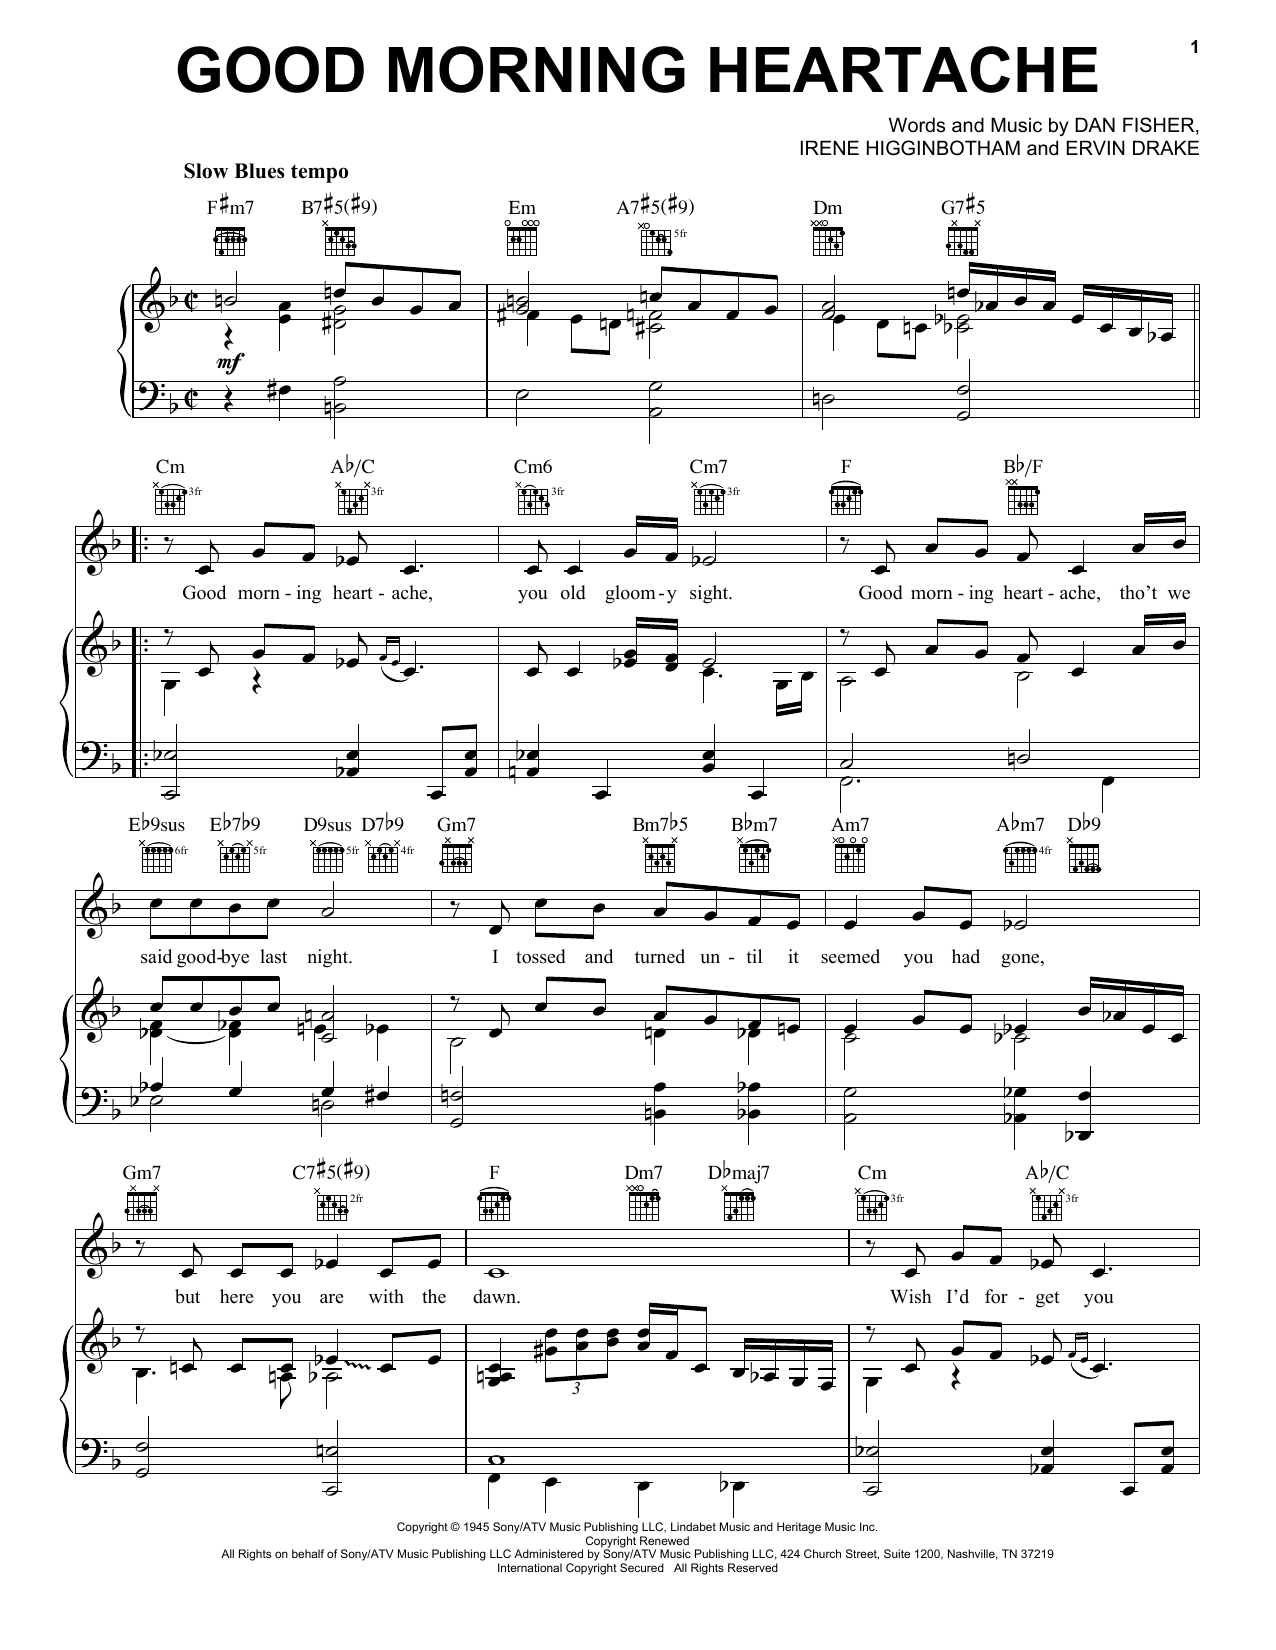 Billie Holiday Good Morning Heartache sheet music notes printable PDF score